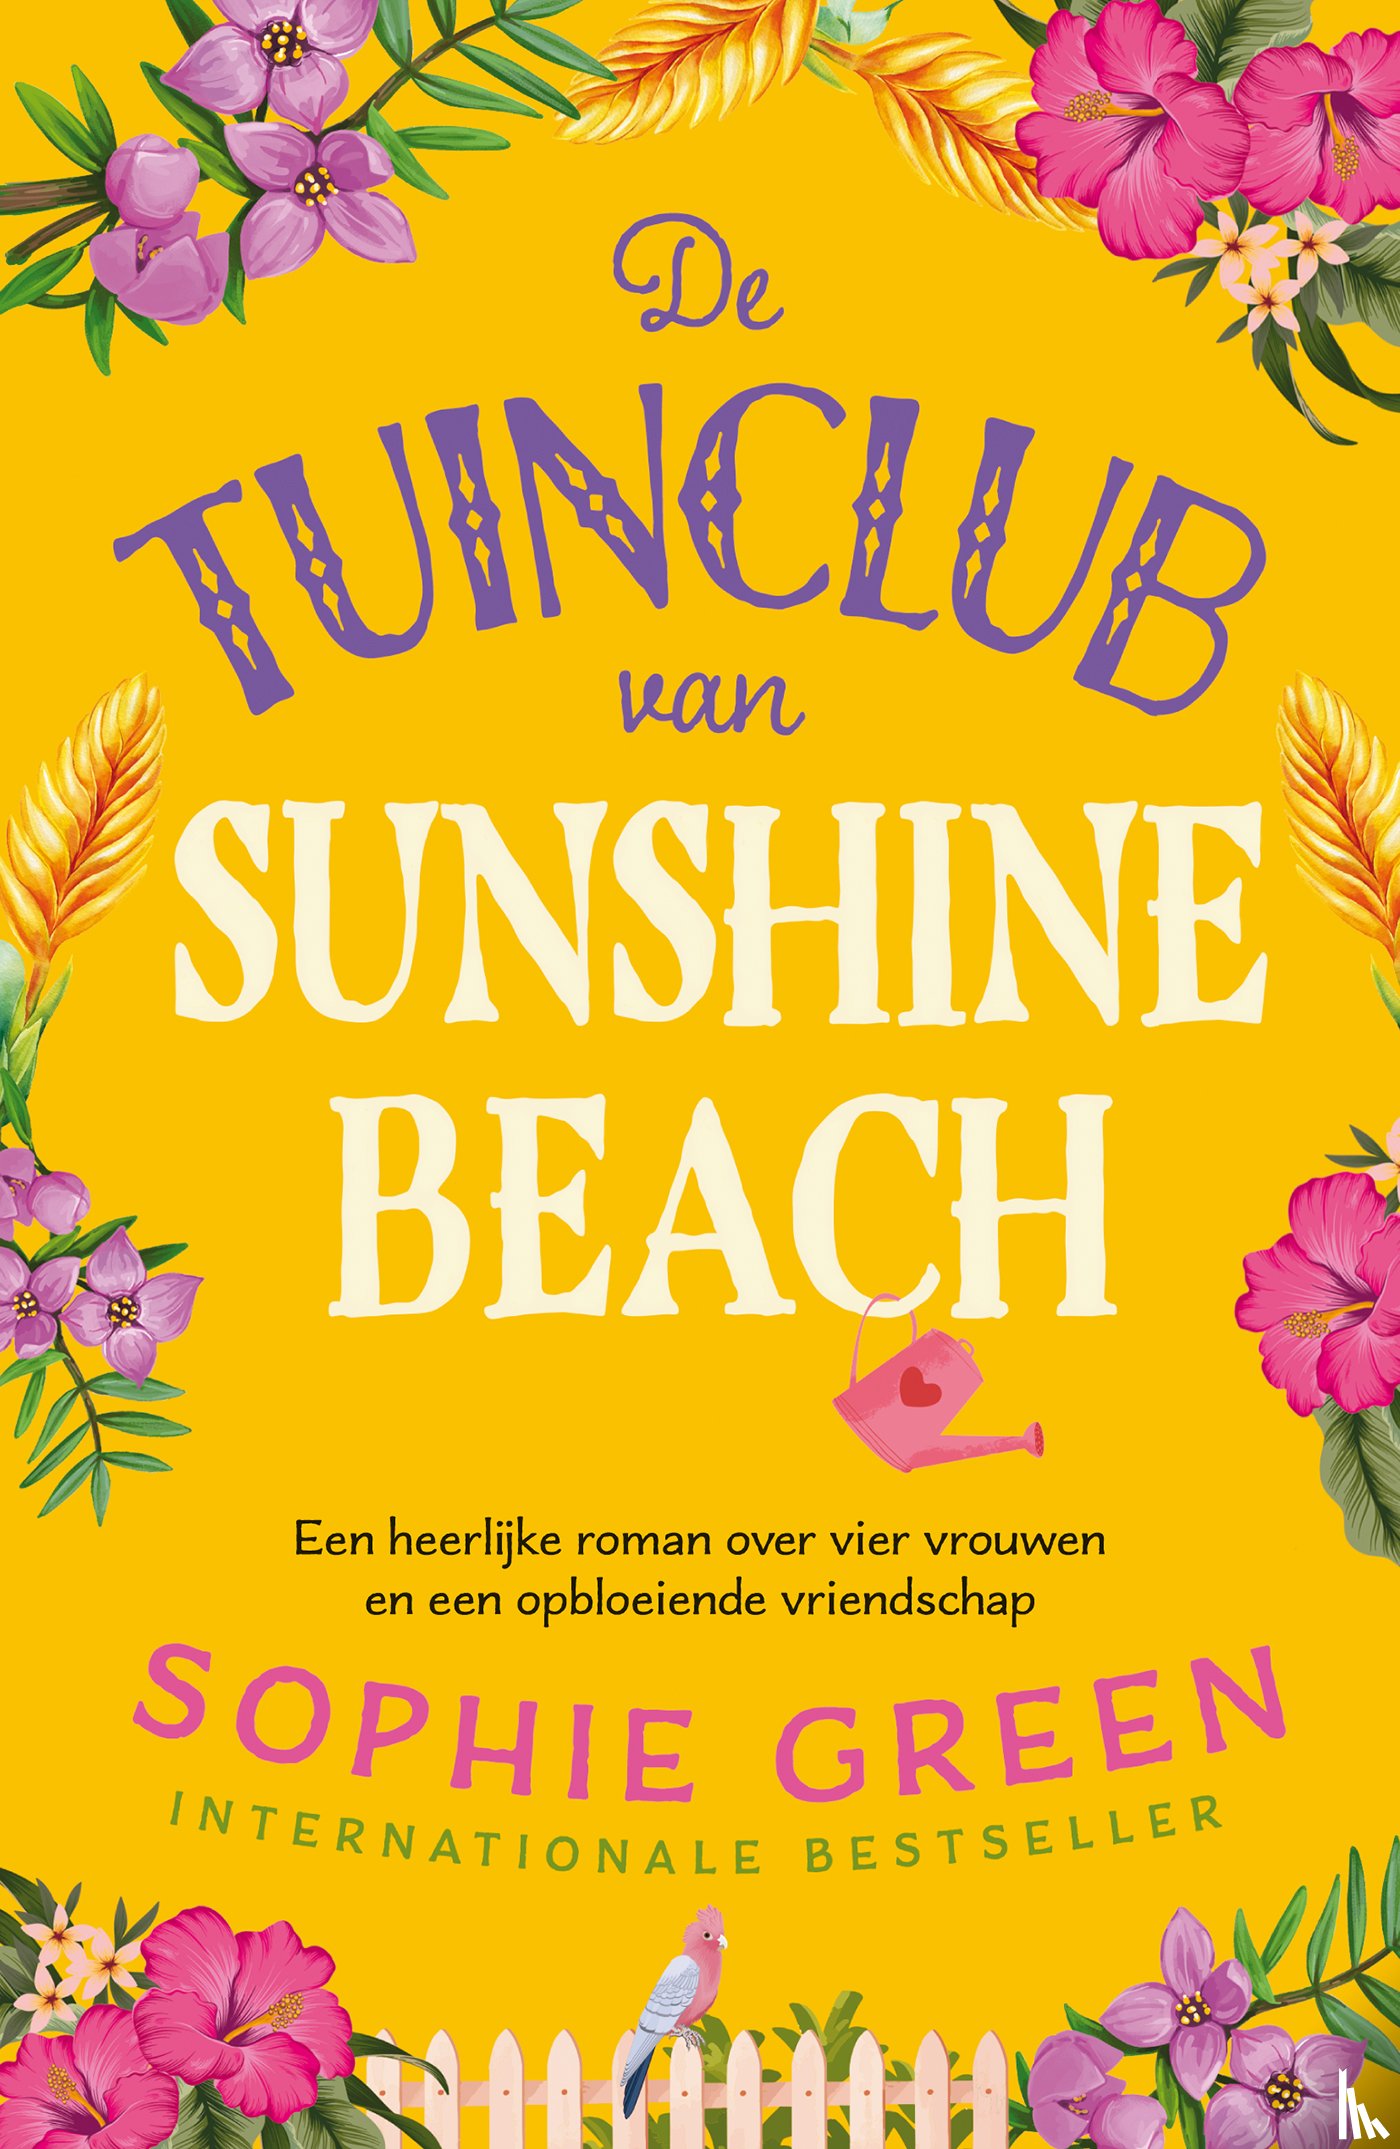 Green, Sophie - De tuinclub van Sunshine Beach